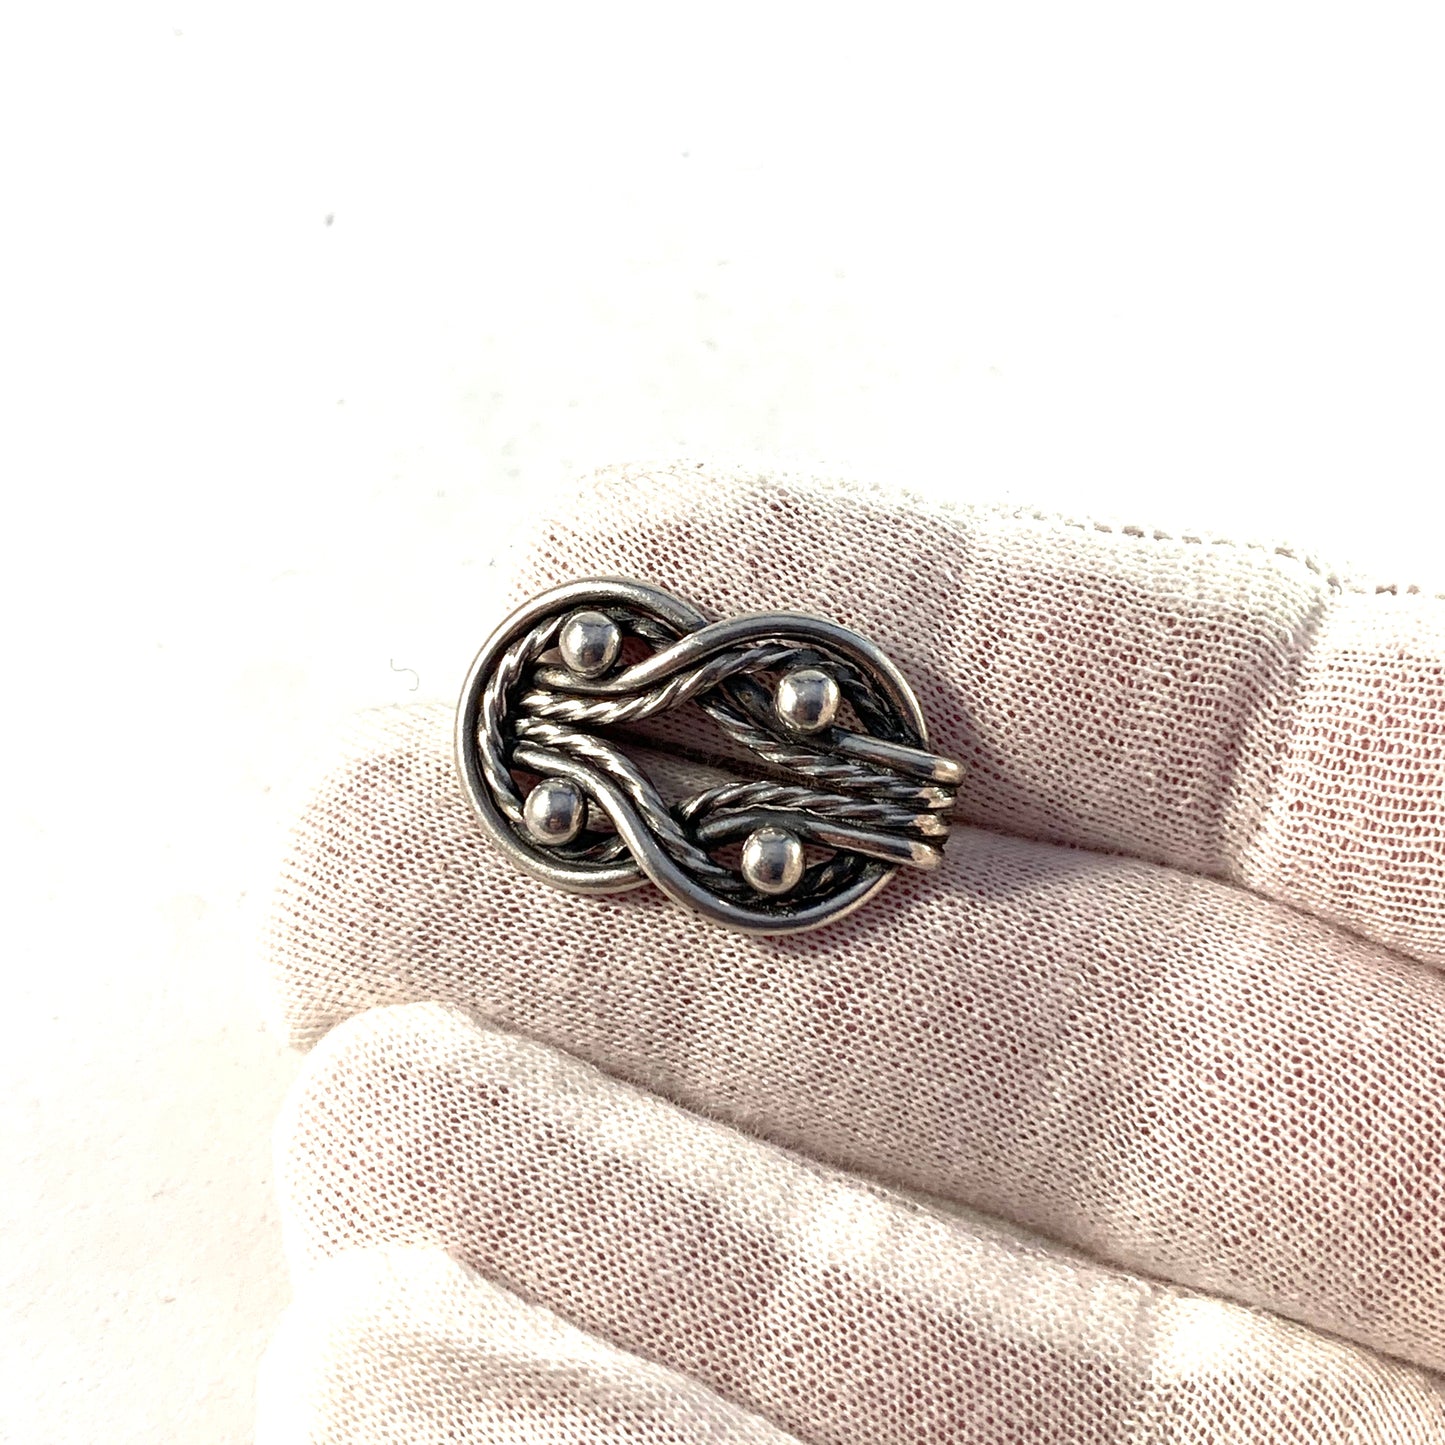 Kalevala Koru, Finland Vintage Sterling Silver Knot Brooch